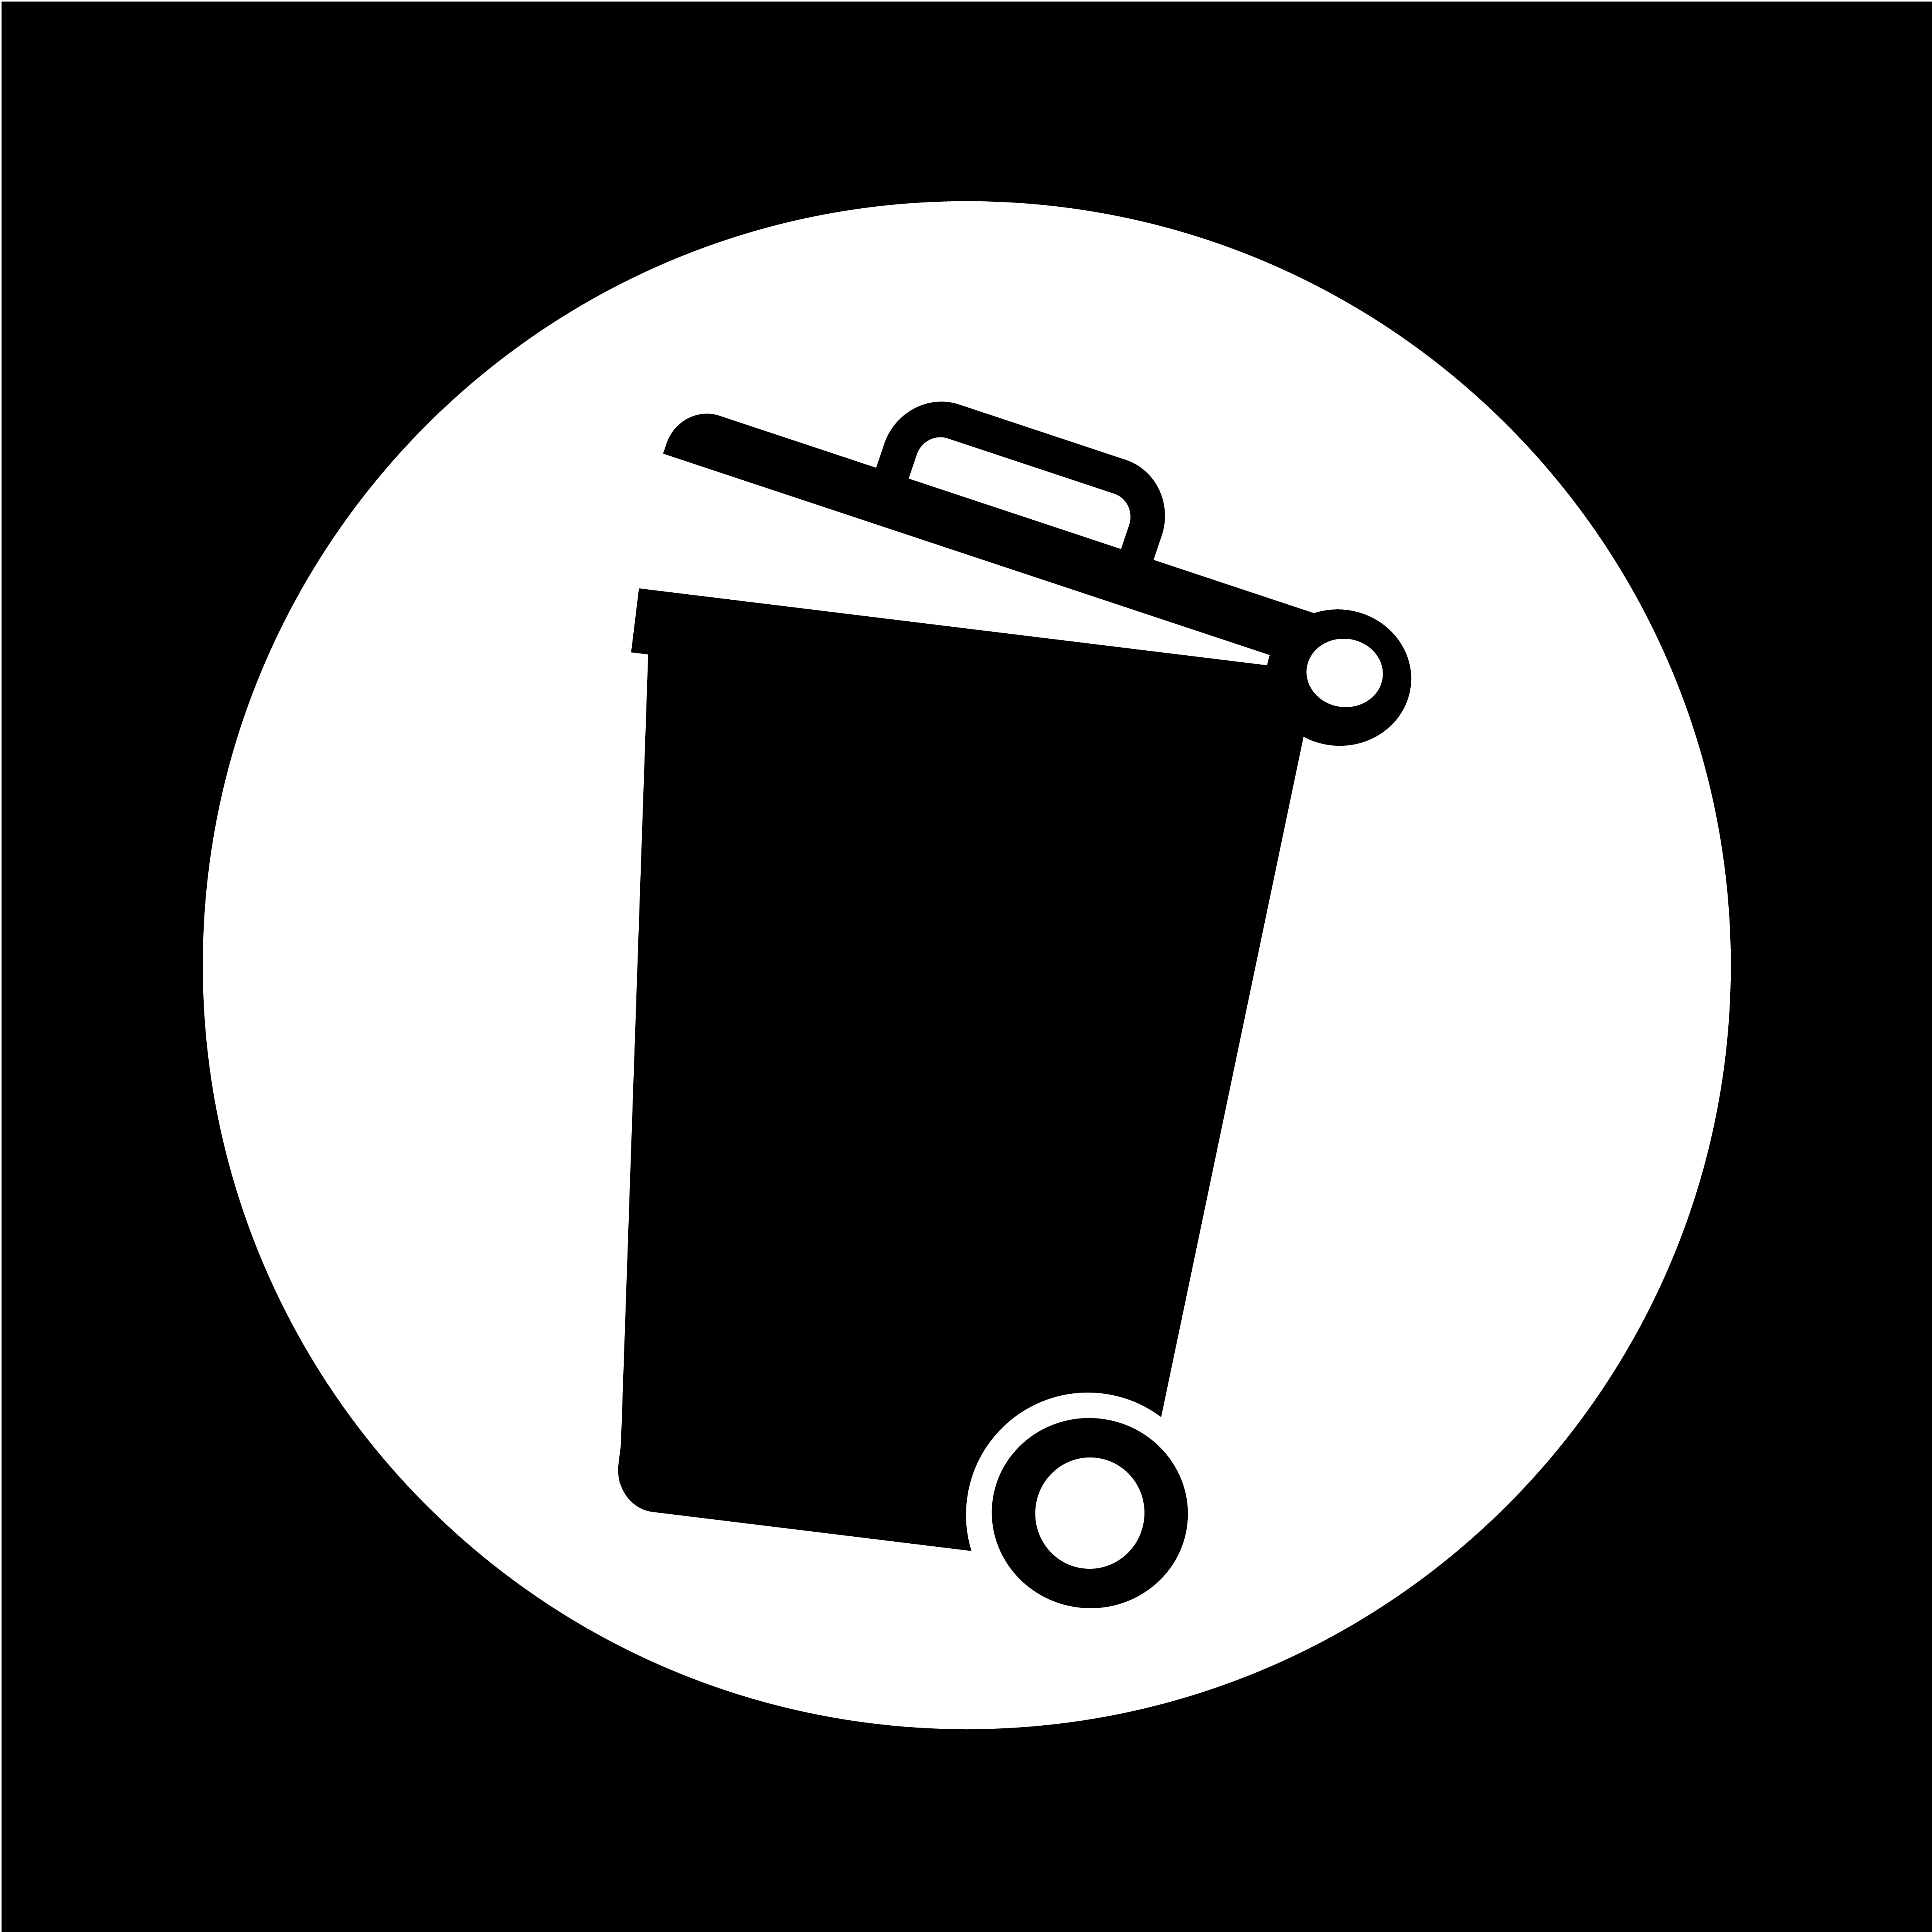 Download trash bin icon 571076 - Download Free Vectors, Clipart ...